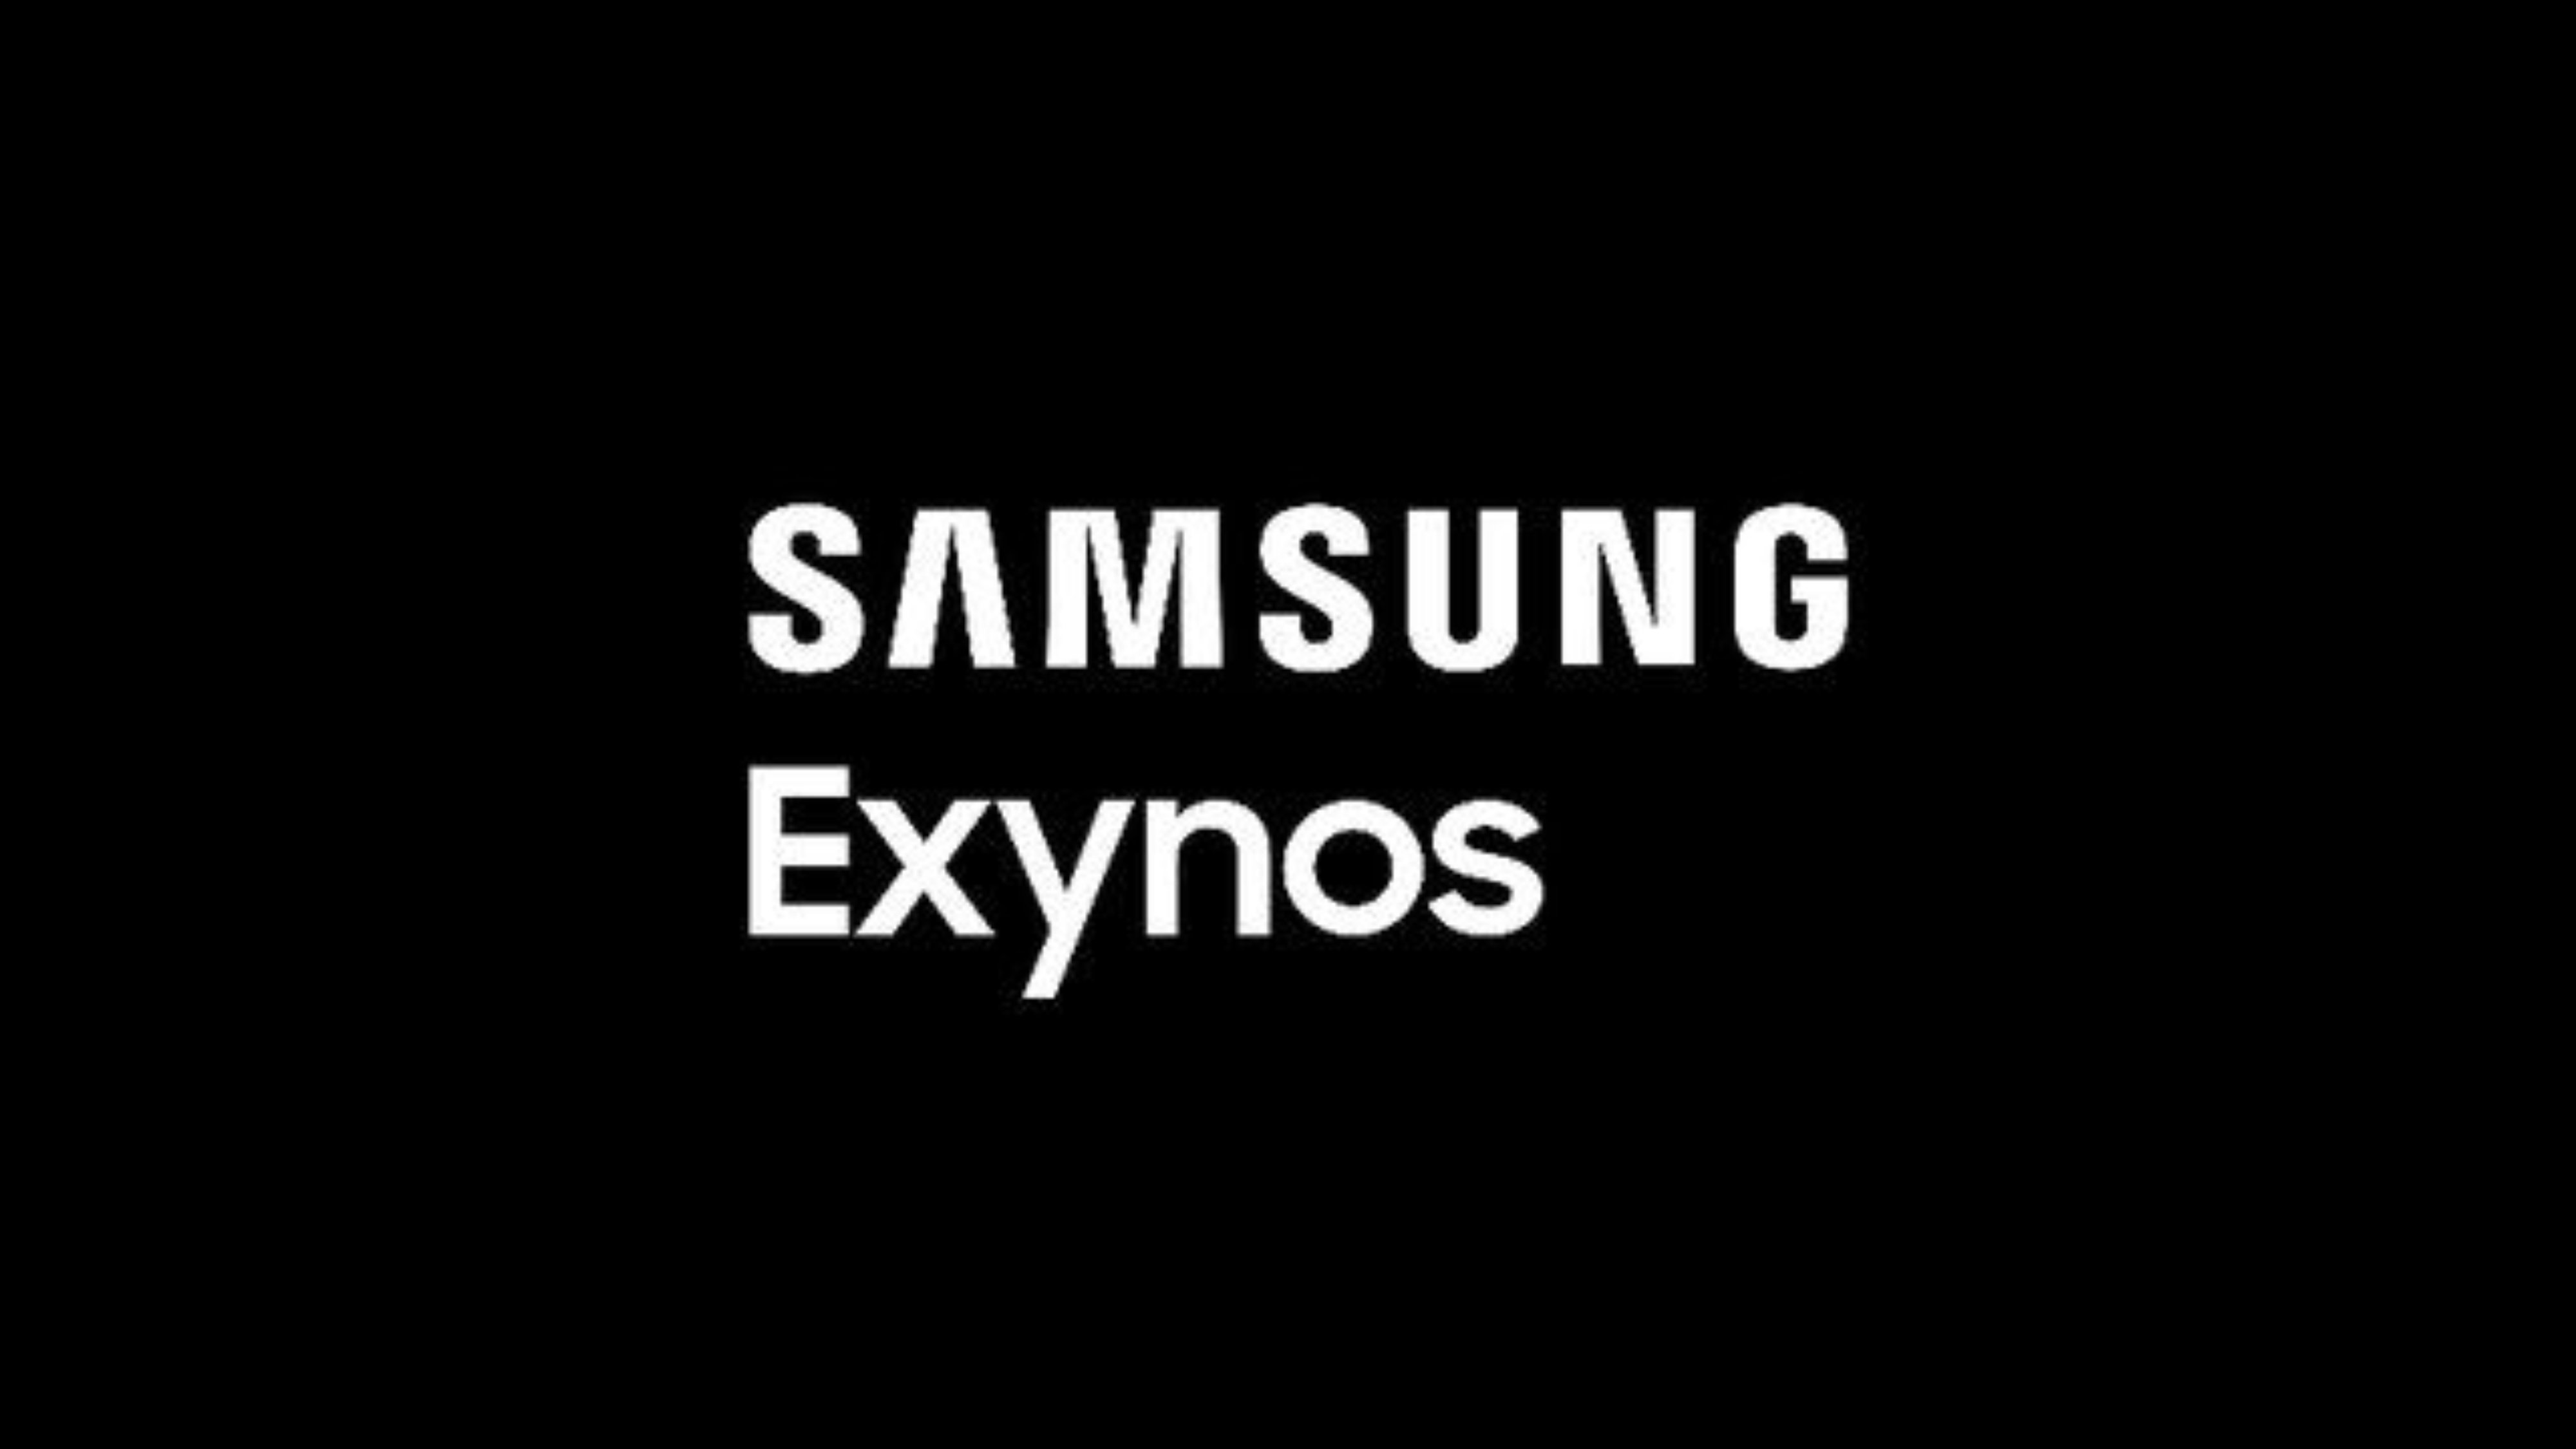 Samsung Exynos Logo Featured